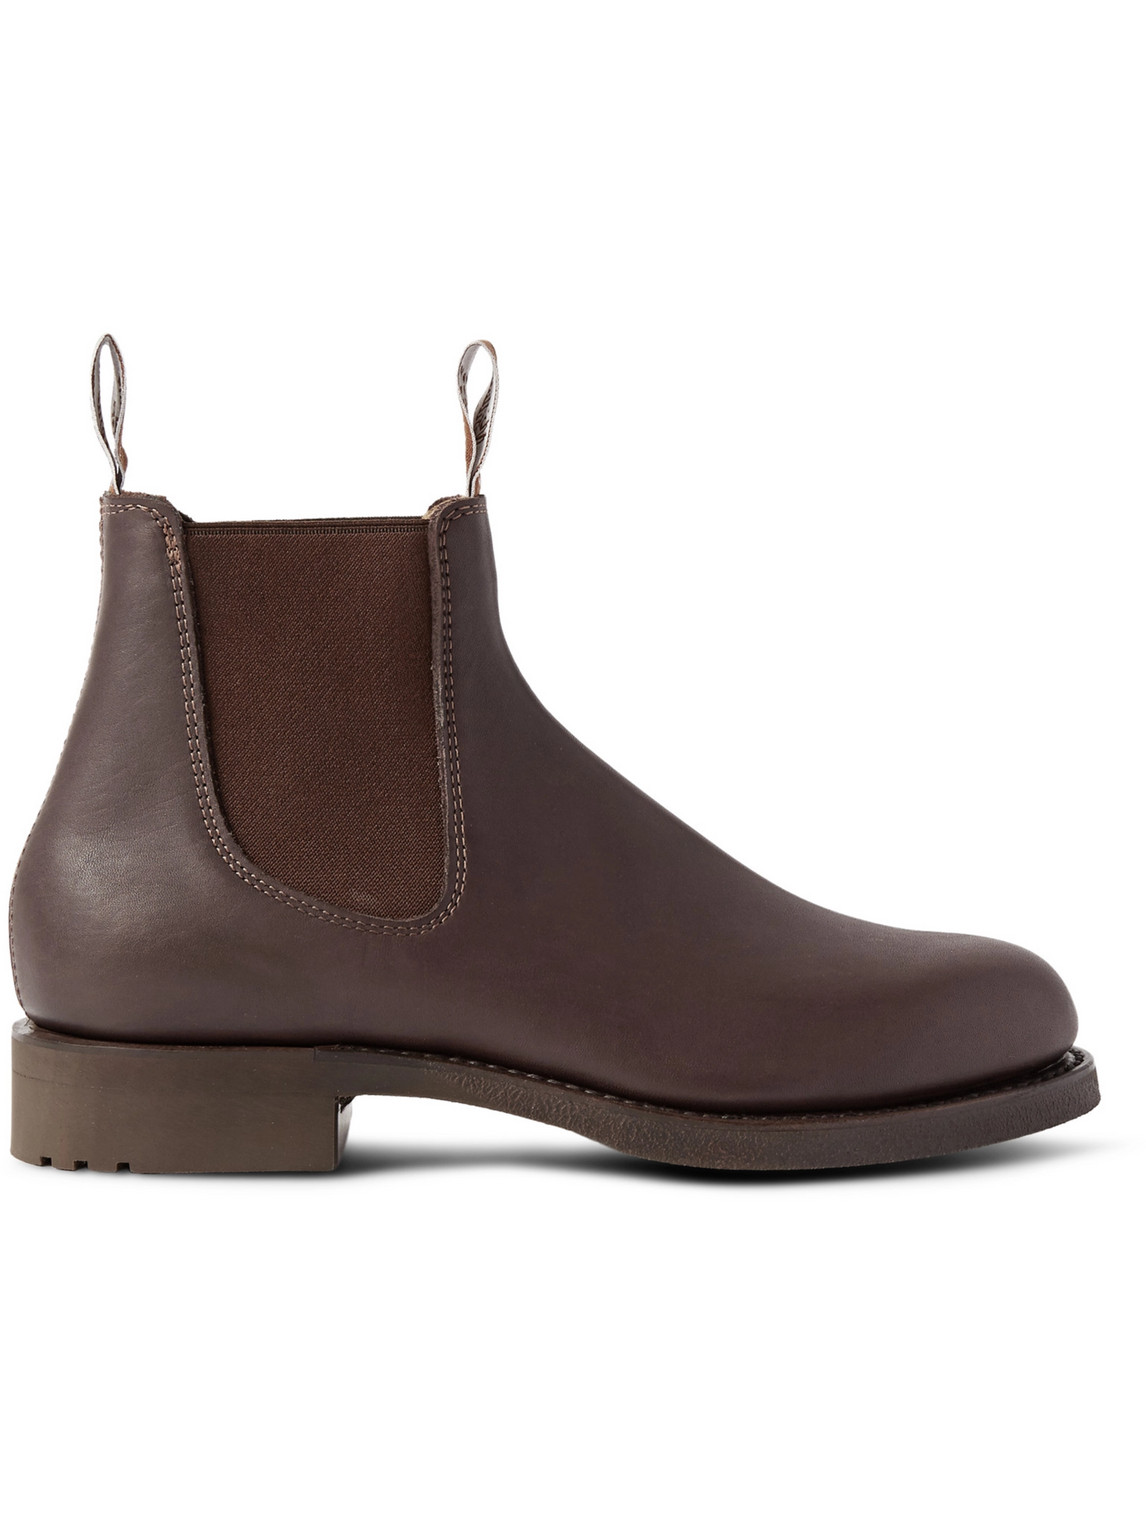 R.M.Williams - Gardener Whole-Cut Leather Chelsea Boots - Men - Brown - UK 7 von R.M.Williams